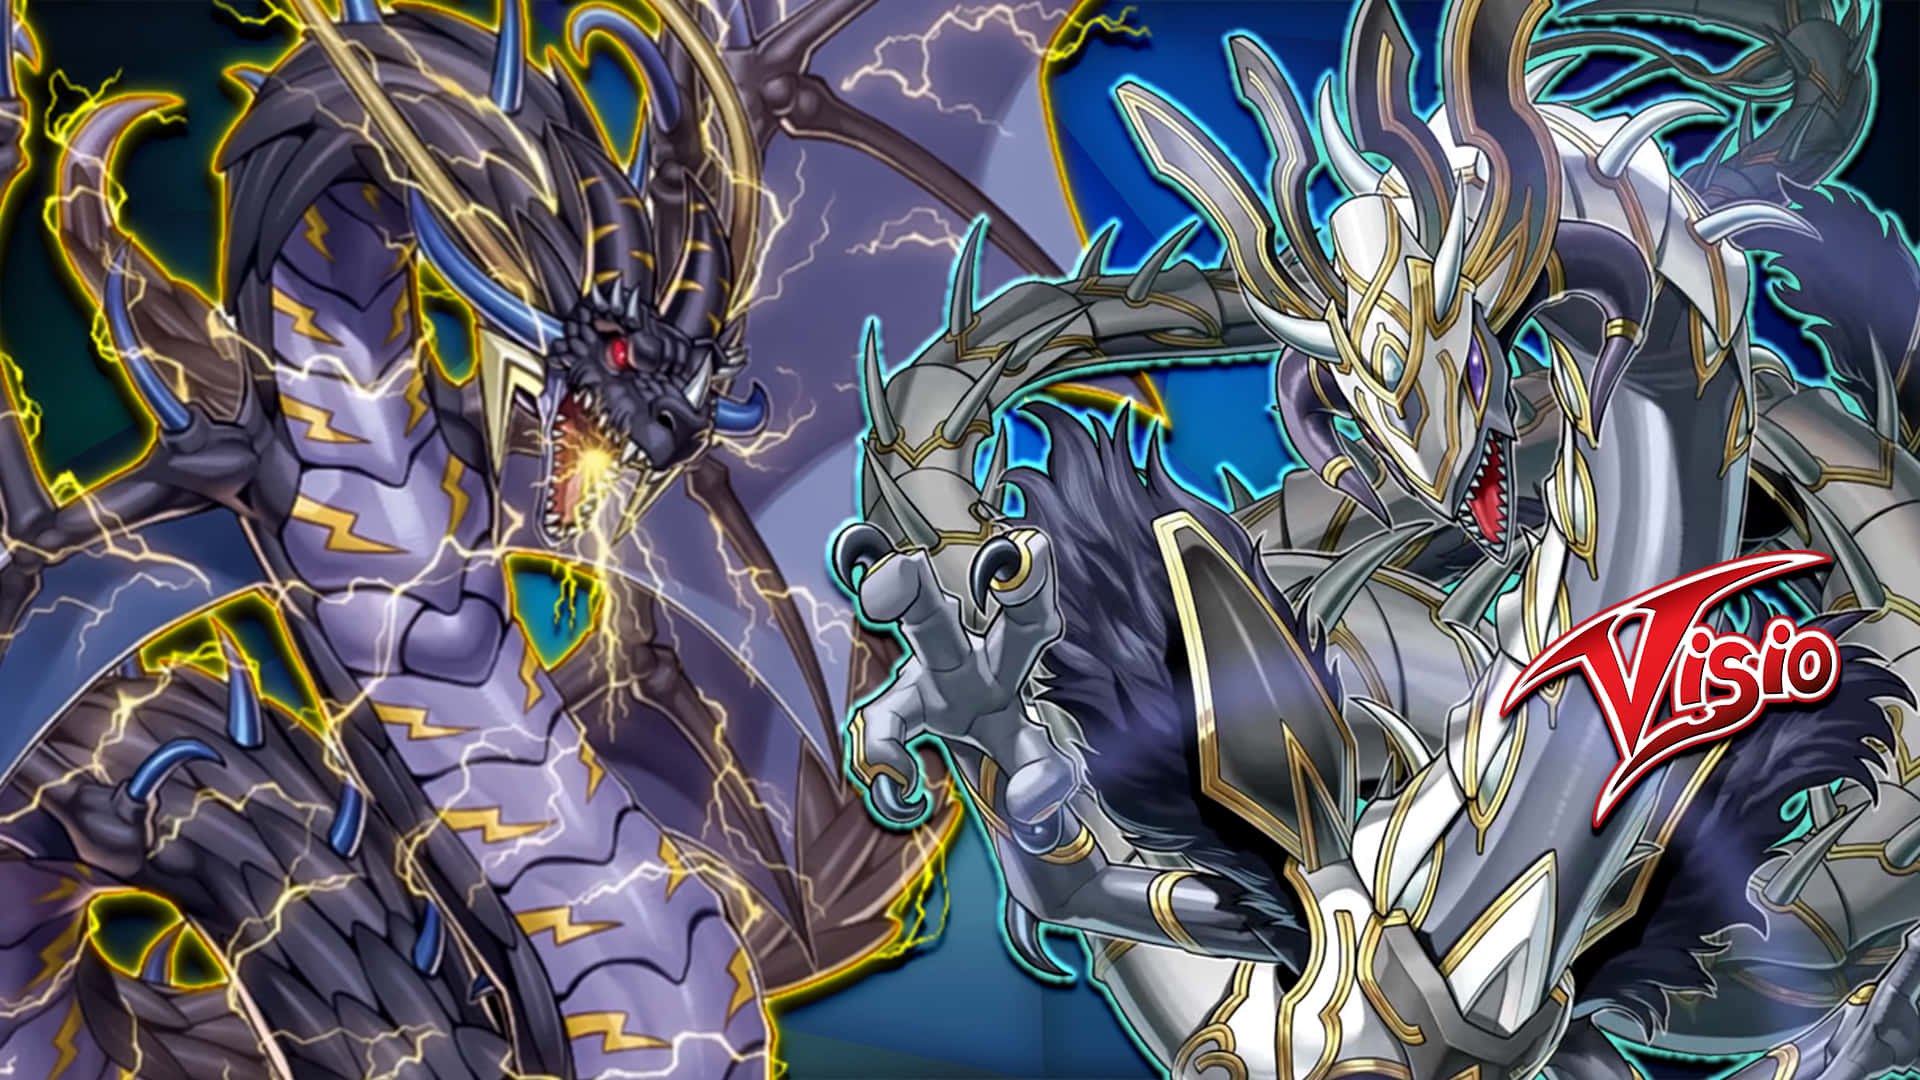 Caption: A Fierce Battle: Yu-Gi-Oh! Dragons Clash in Intense Duel Wallpaper